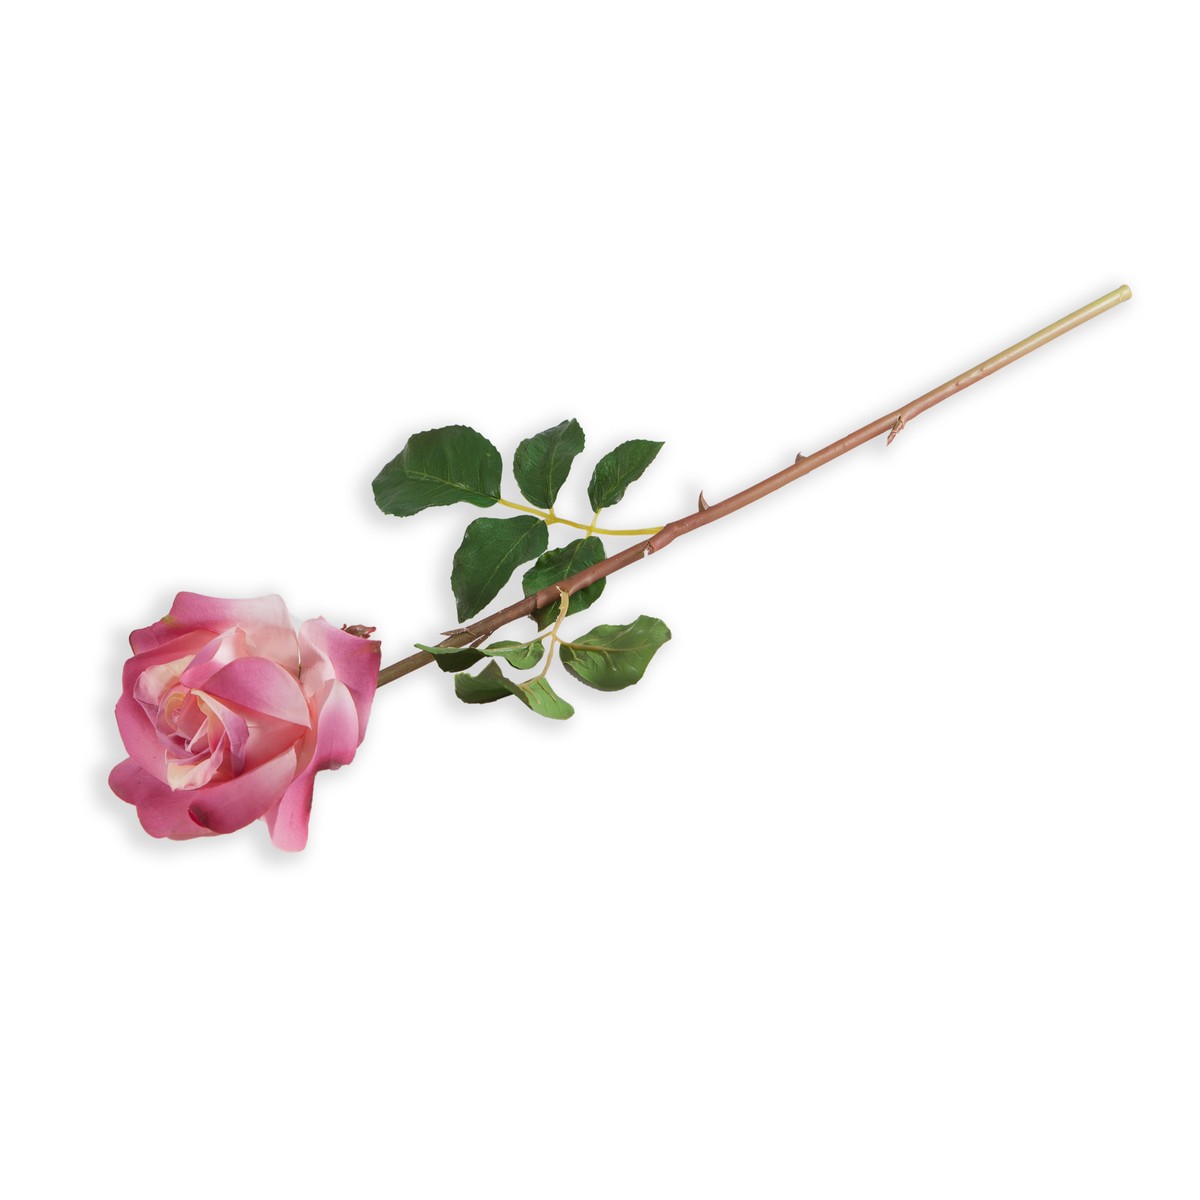   Rose de jardin Violet lilas 55cm